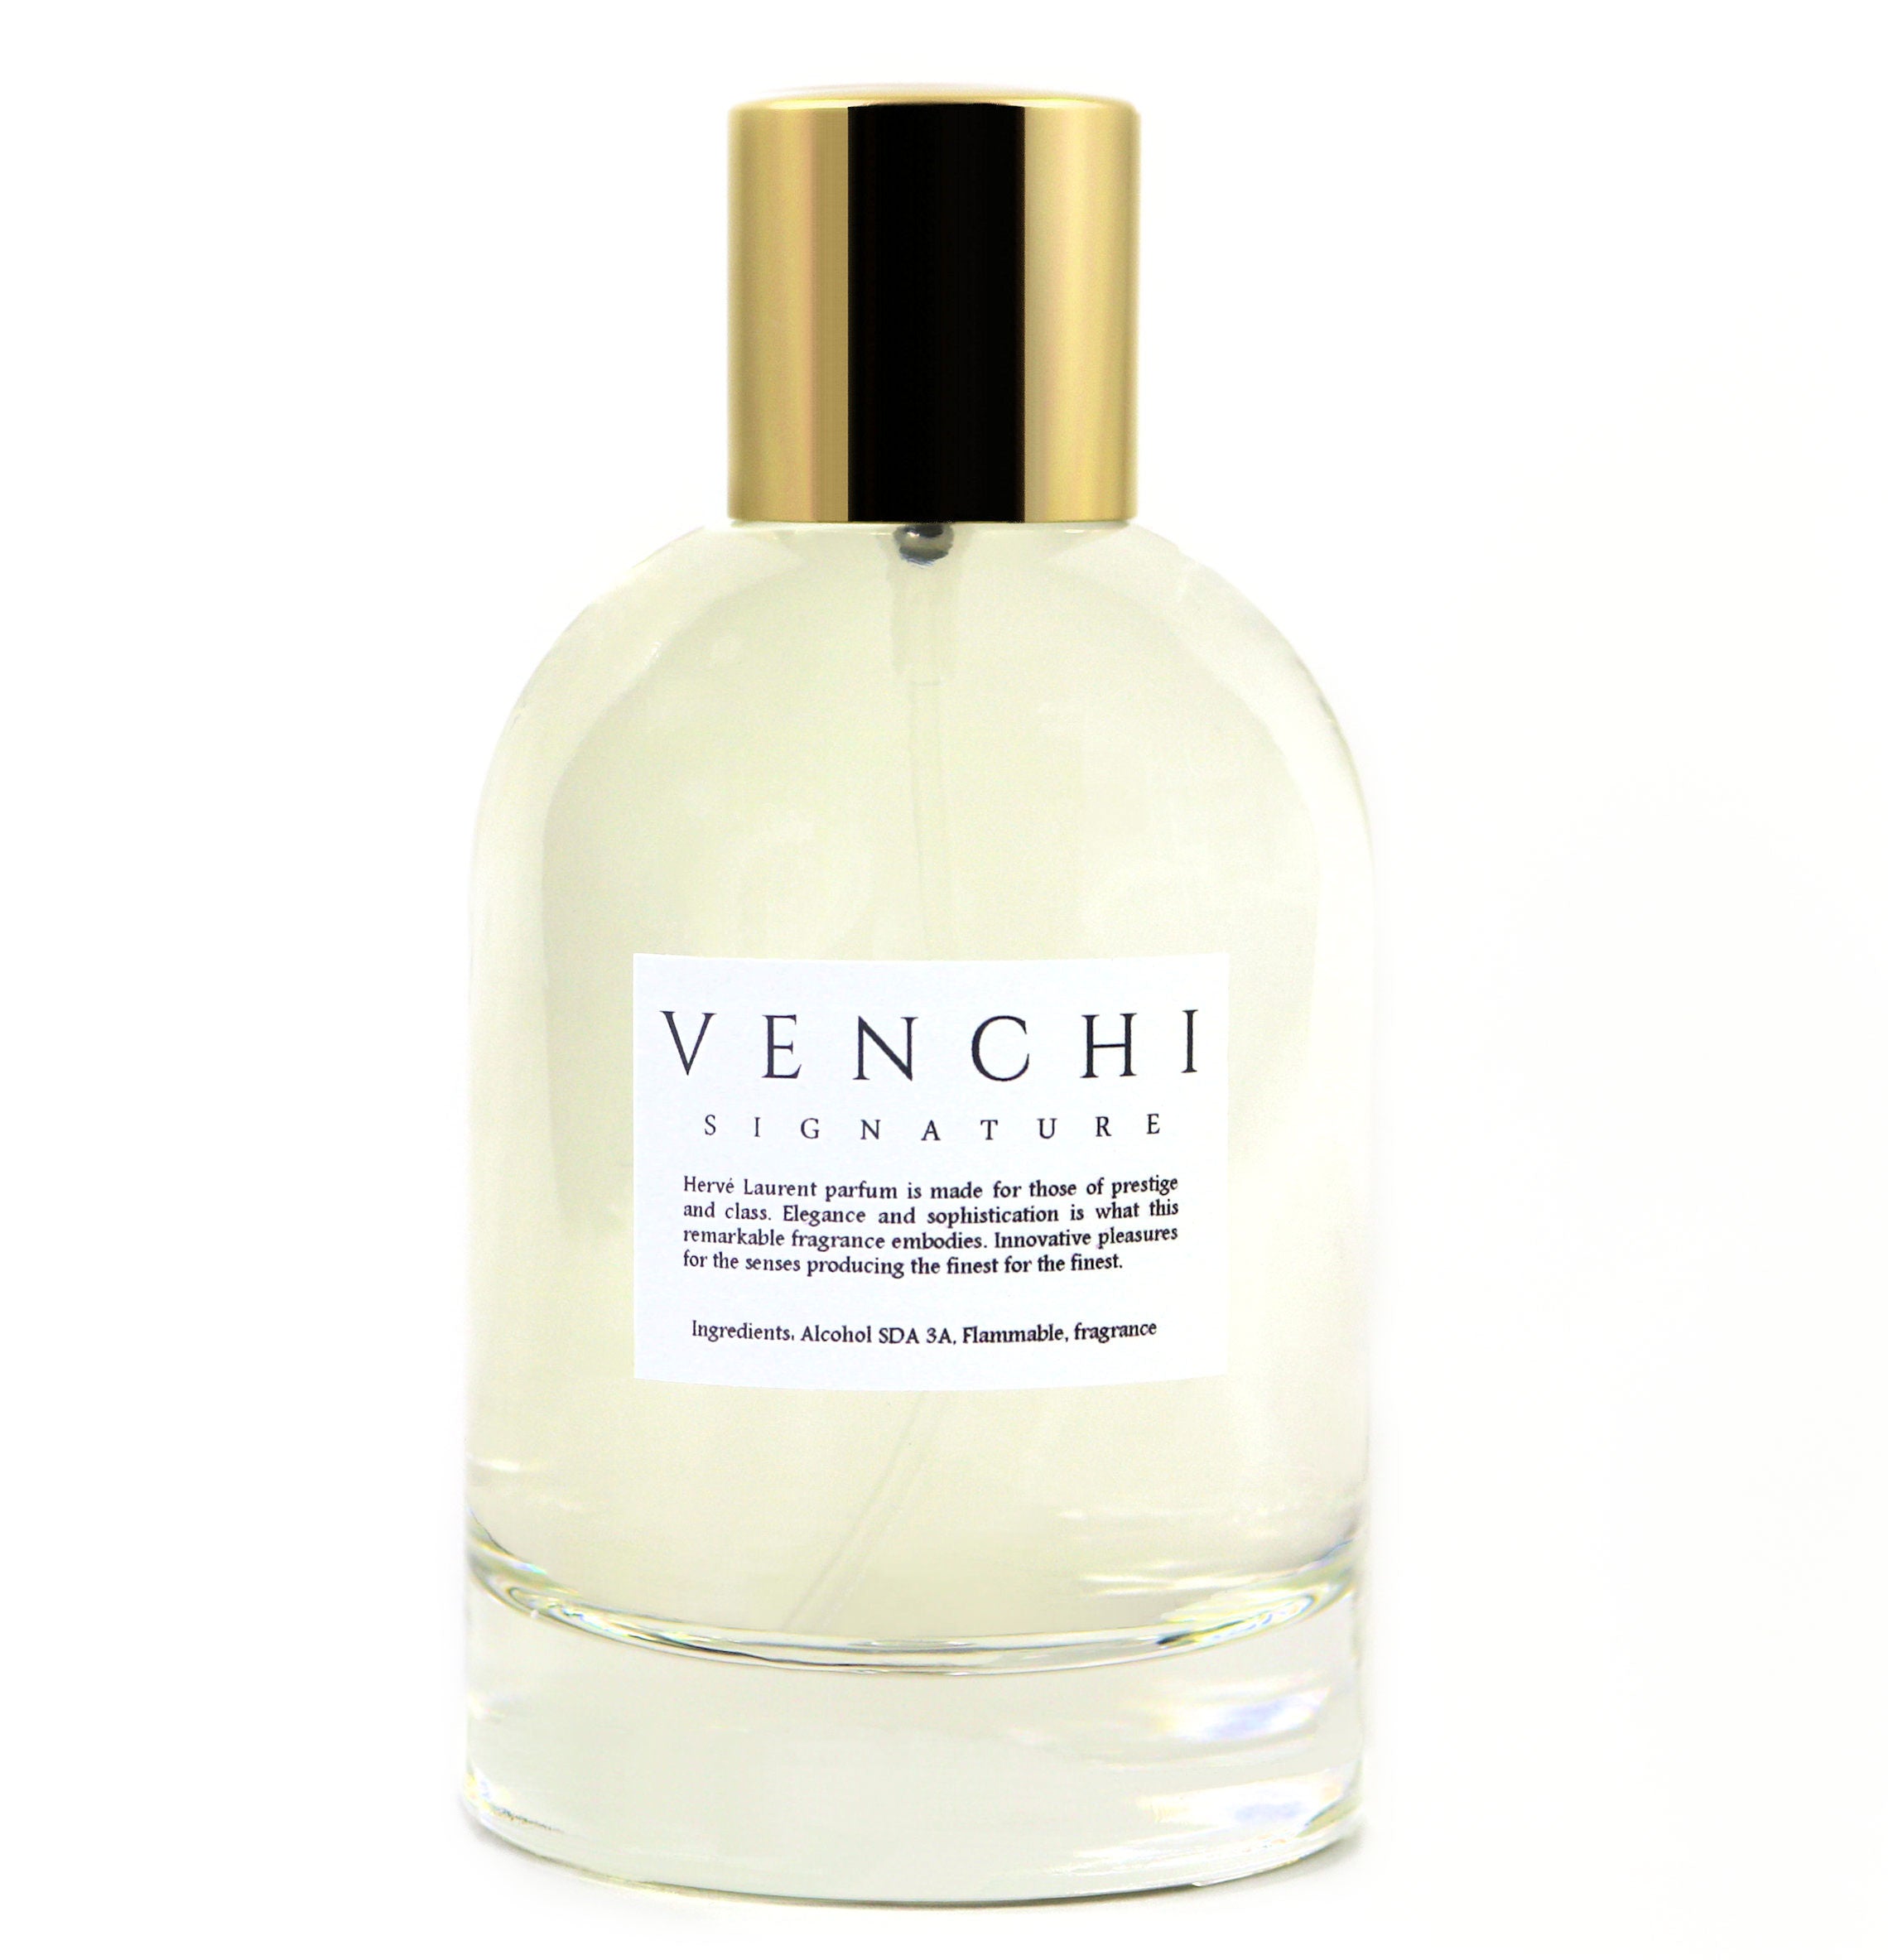 Herve Laurent, Perfume, Parfum, High End Luxury, Designer Fragrance, Fashion Fragrance, Venchi, Women Fragrance